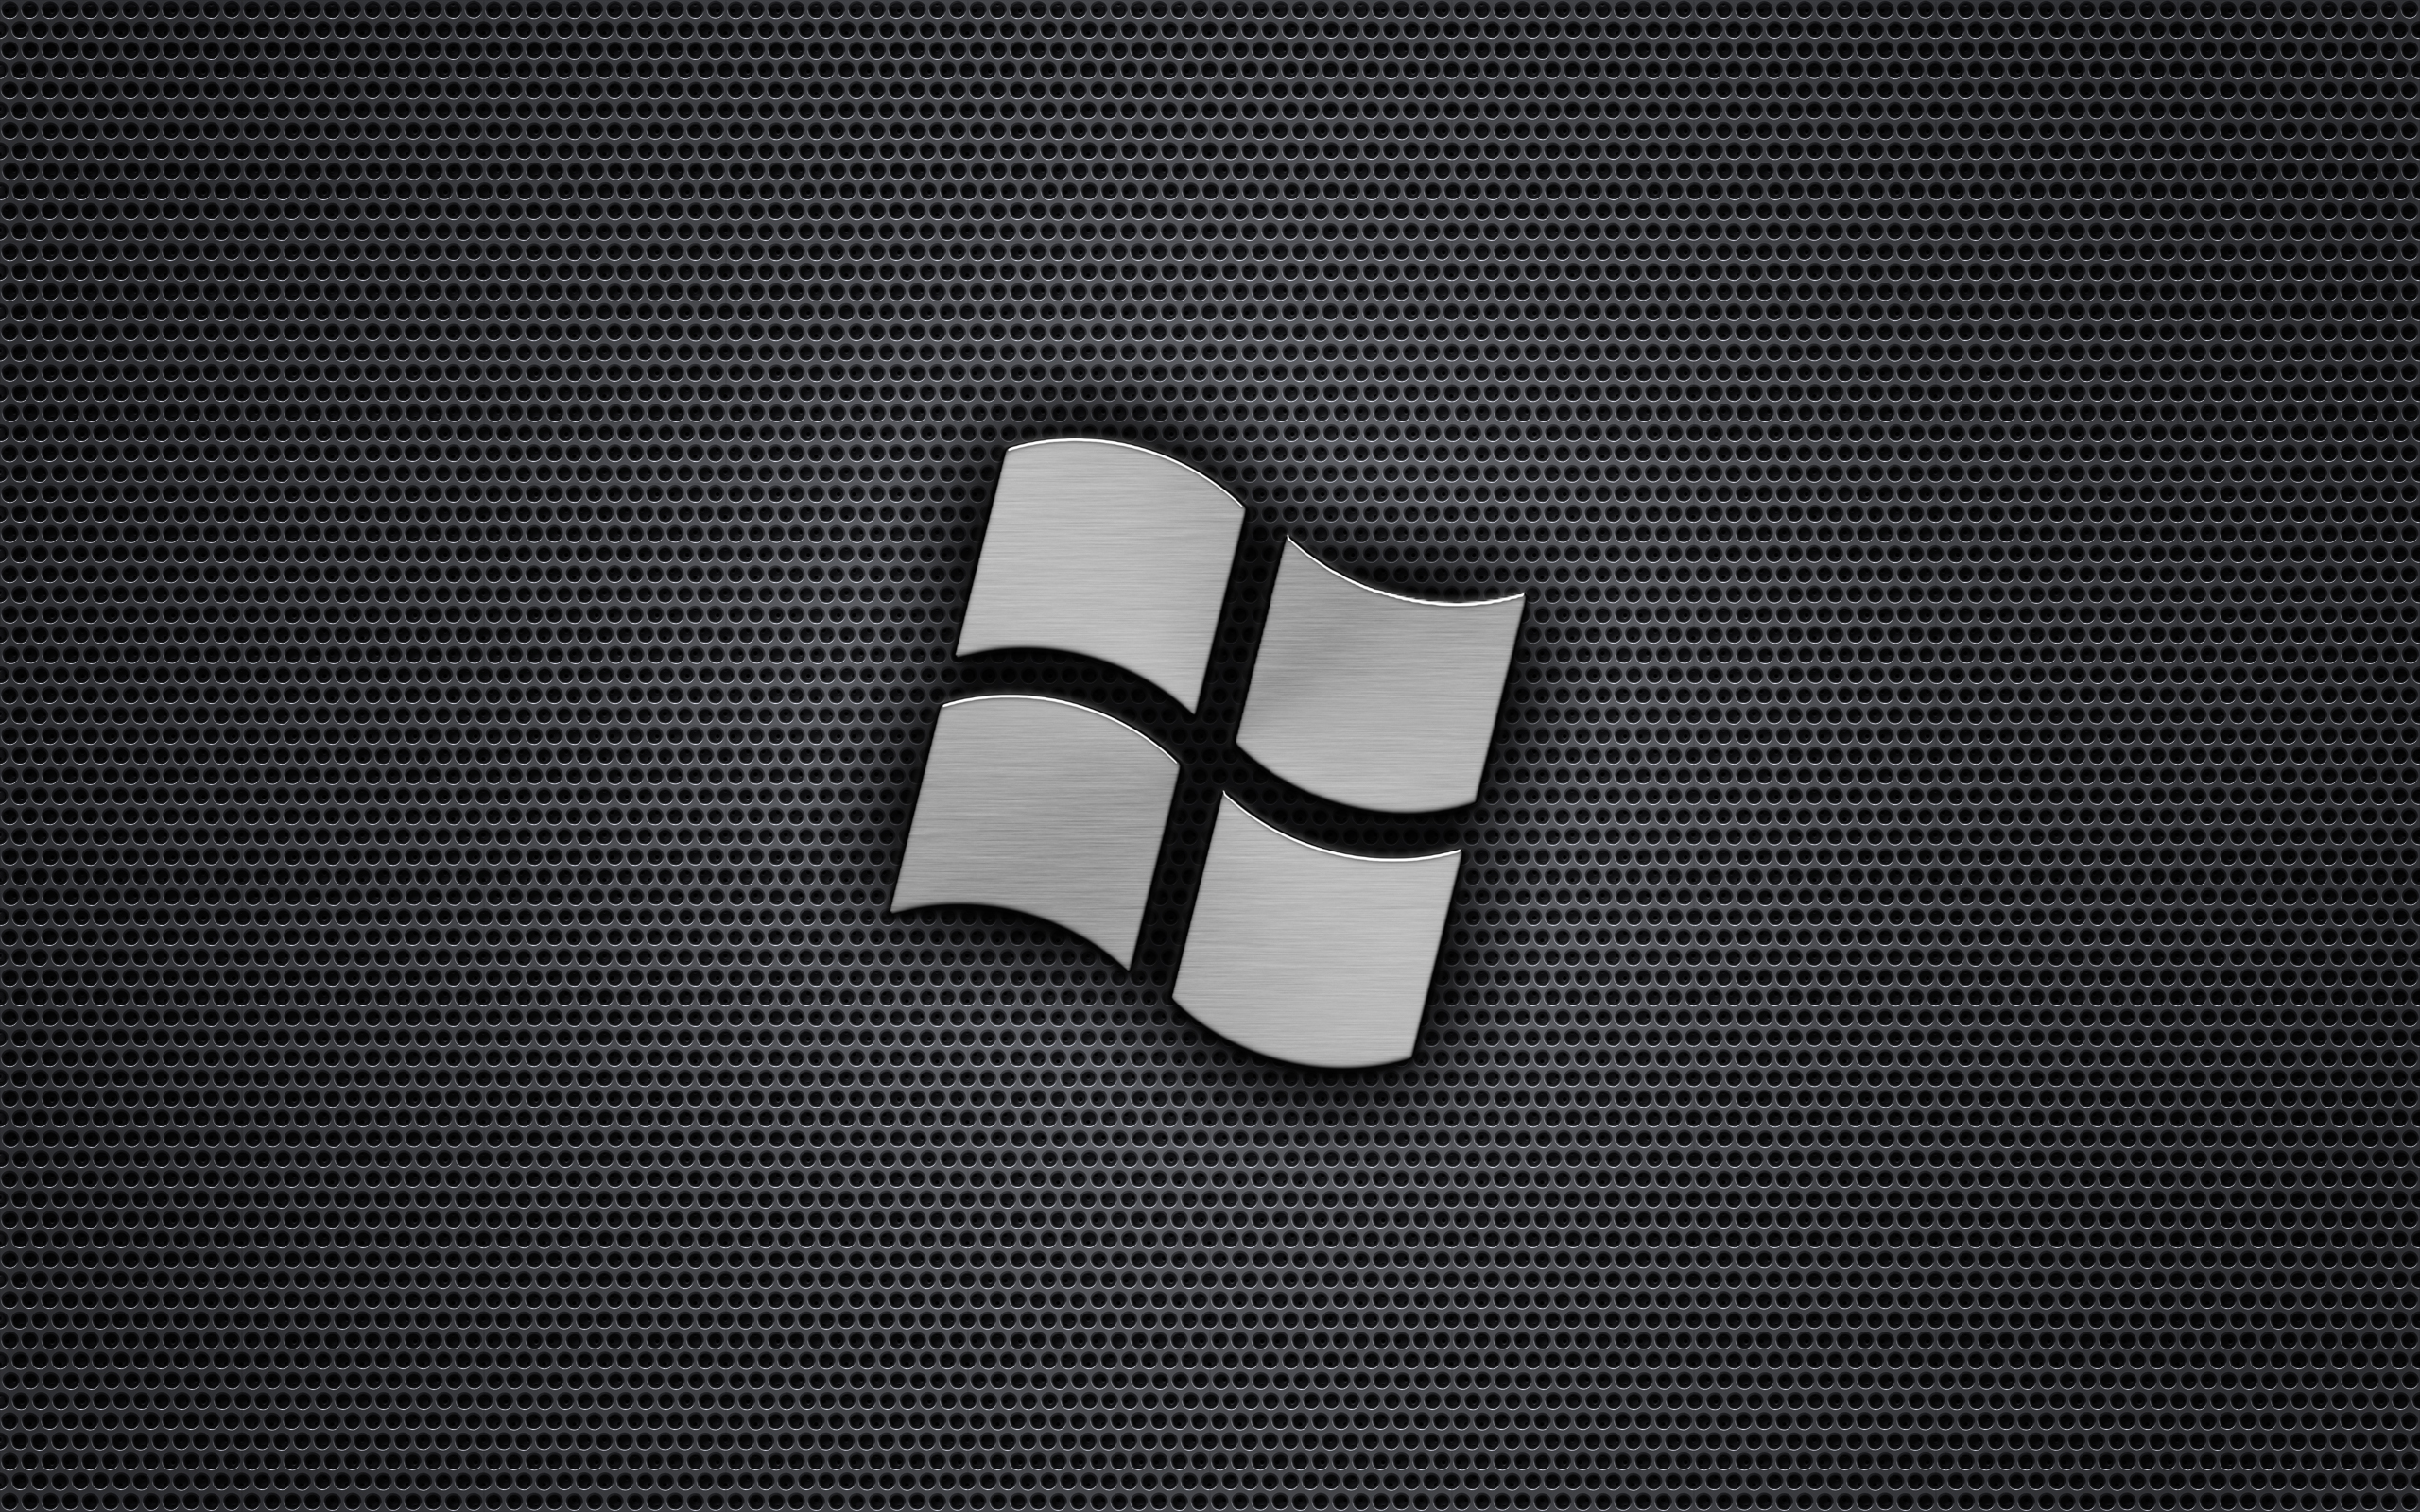 windows-logo-metal-grid-art-2560x1600.jpg